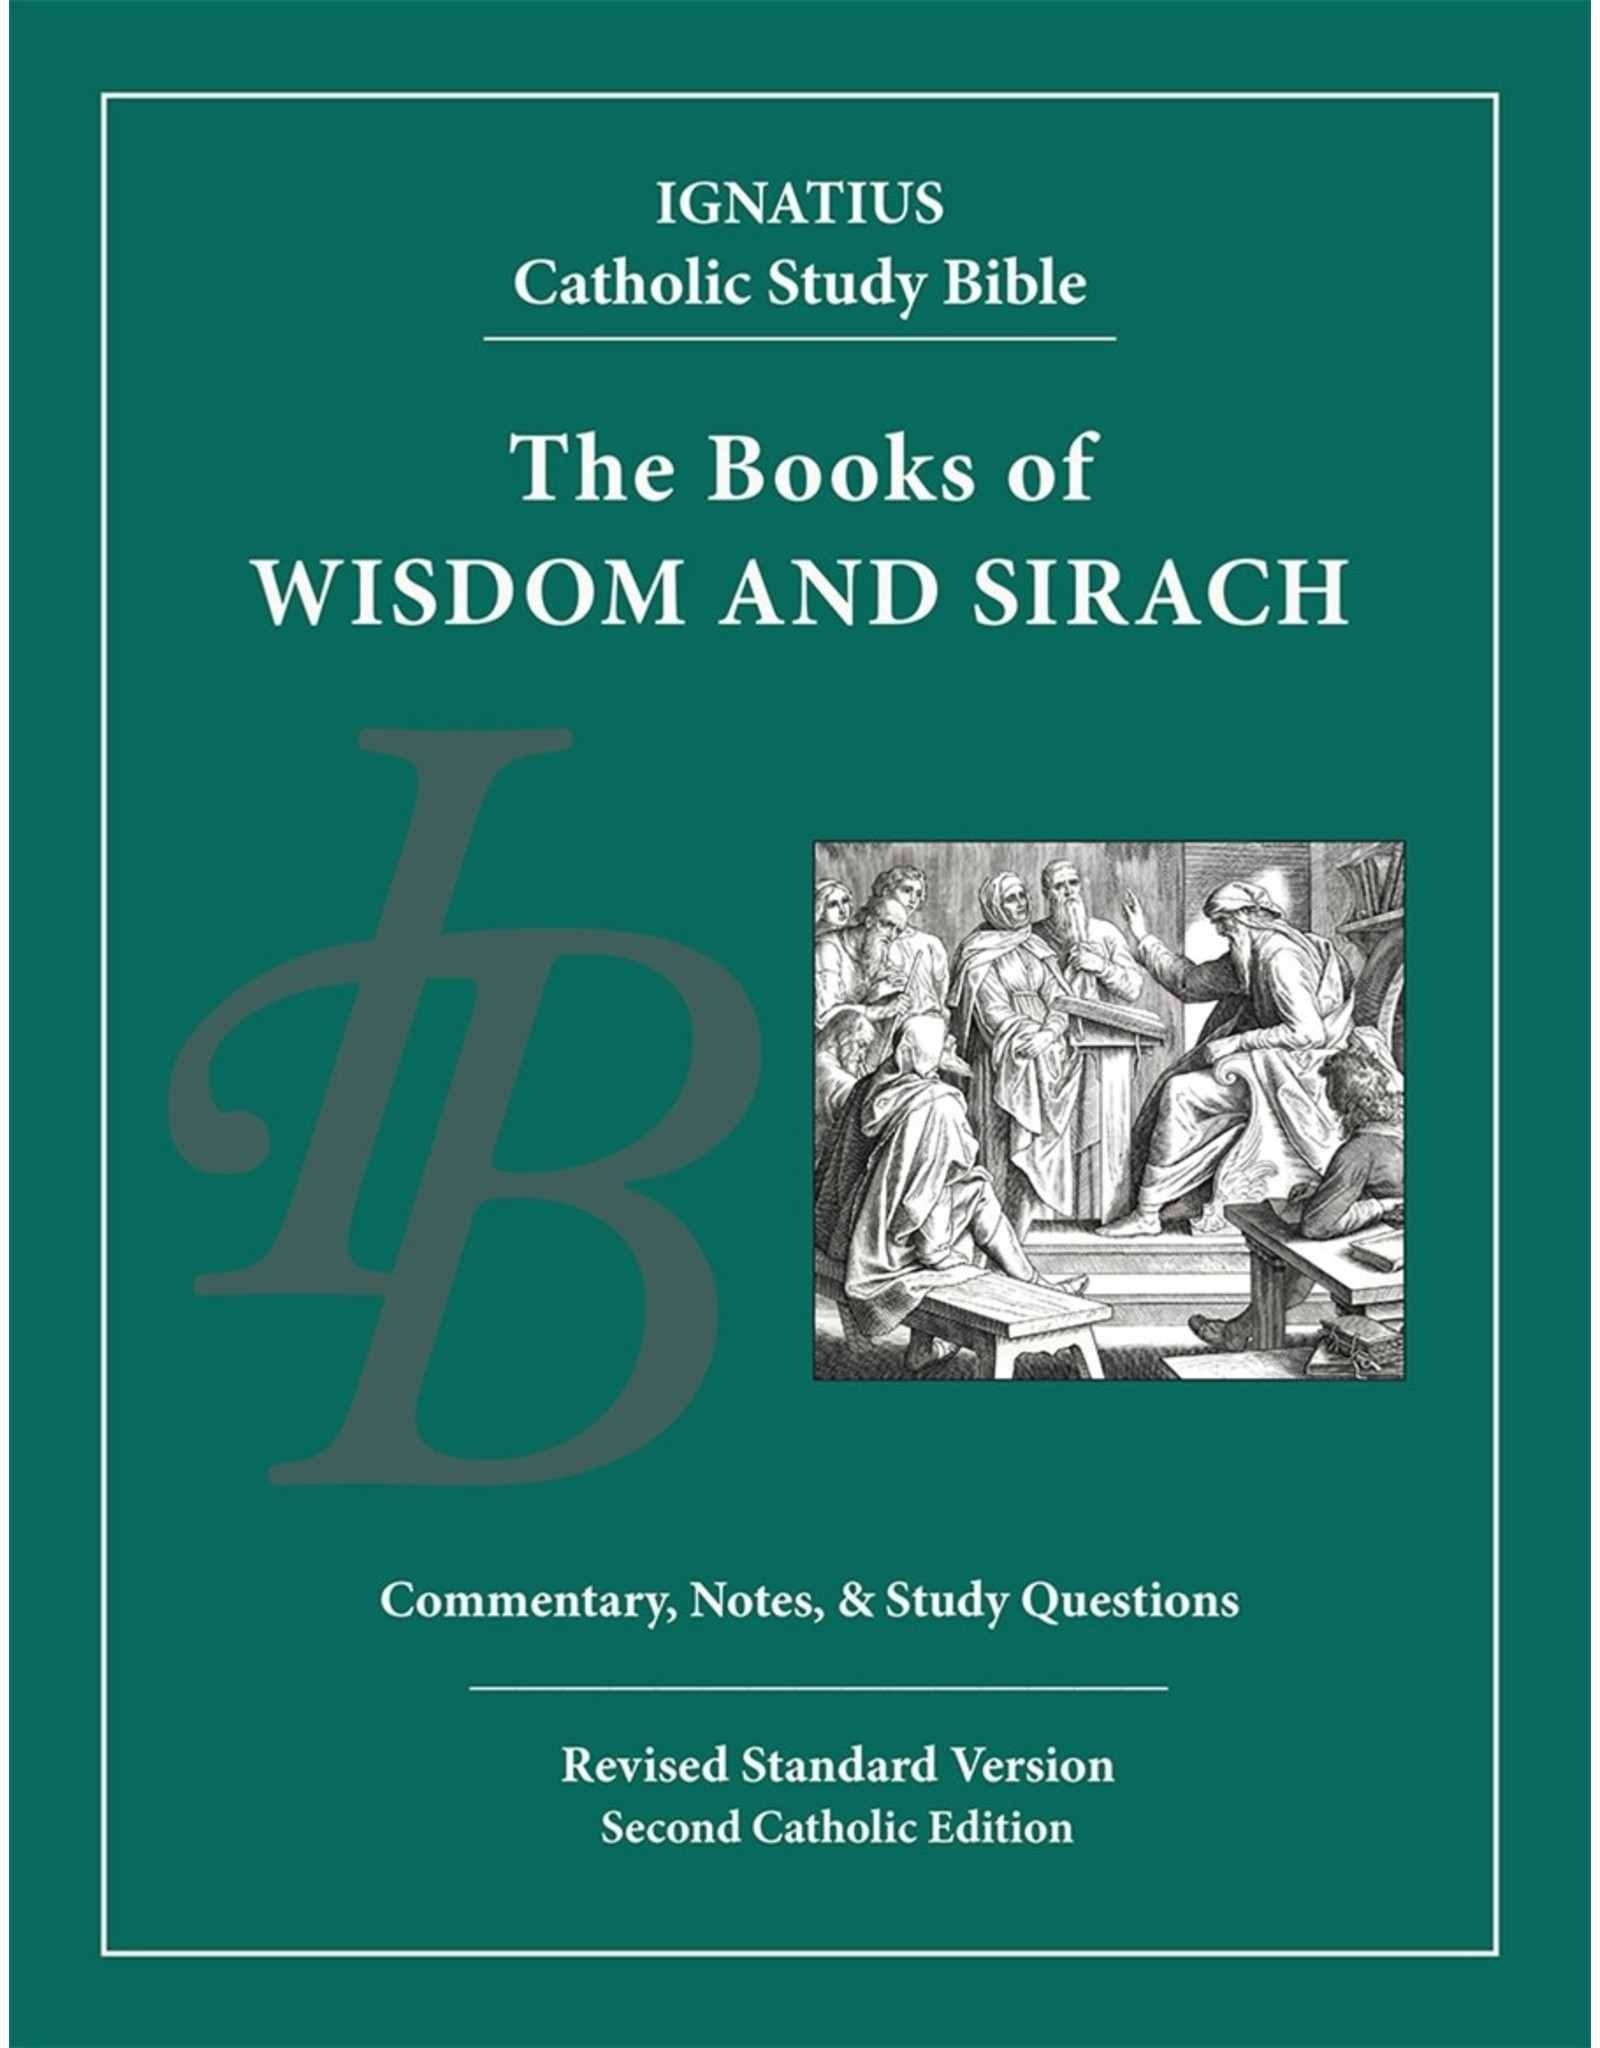 RSV Ignatius Catholic Study Bible-Wisdom & Sirach